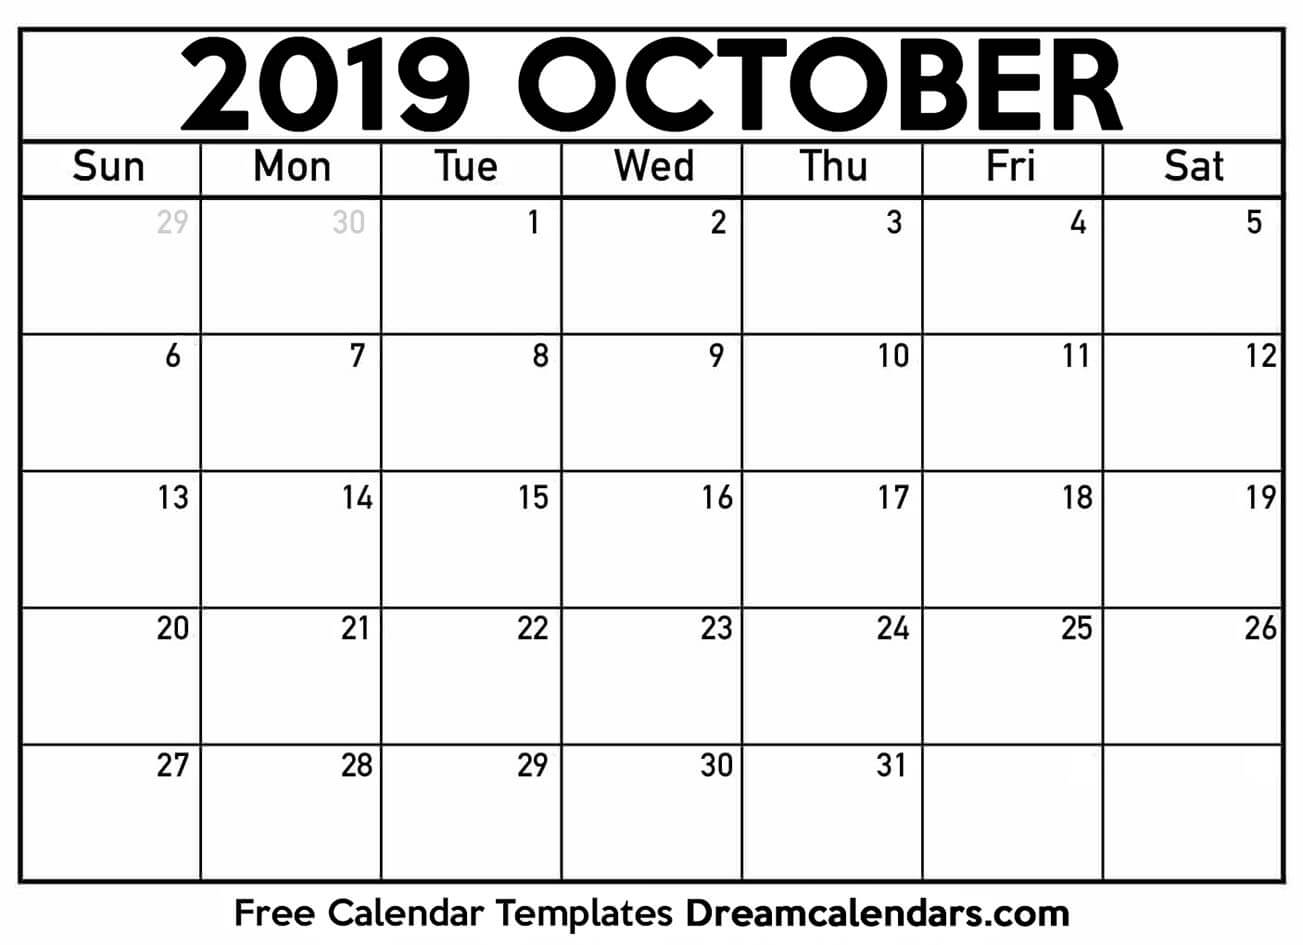 October 2019 calendar free blank printable templates